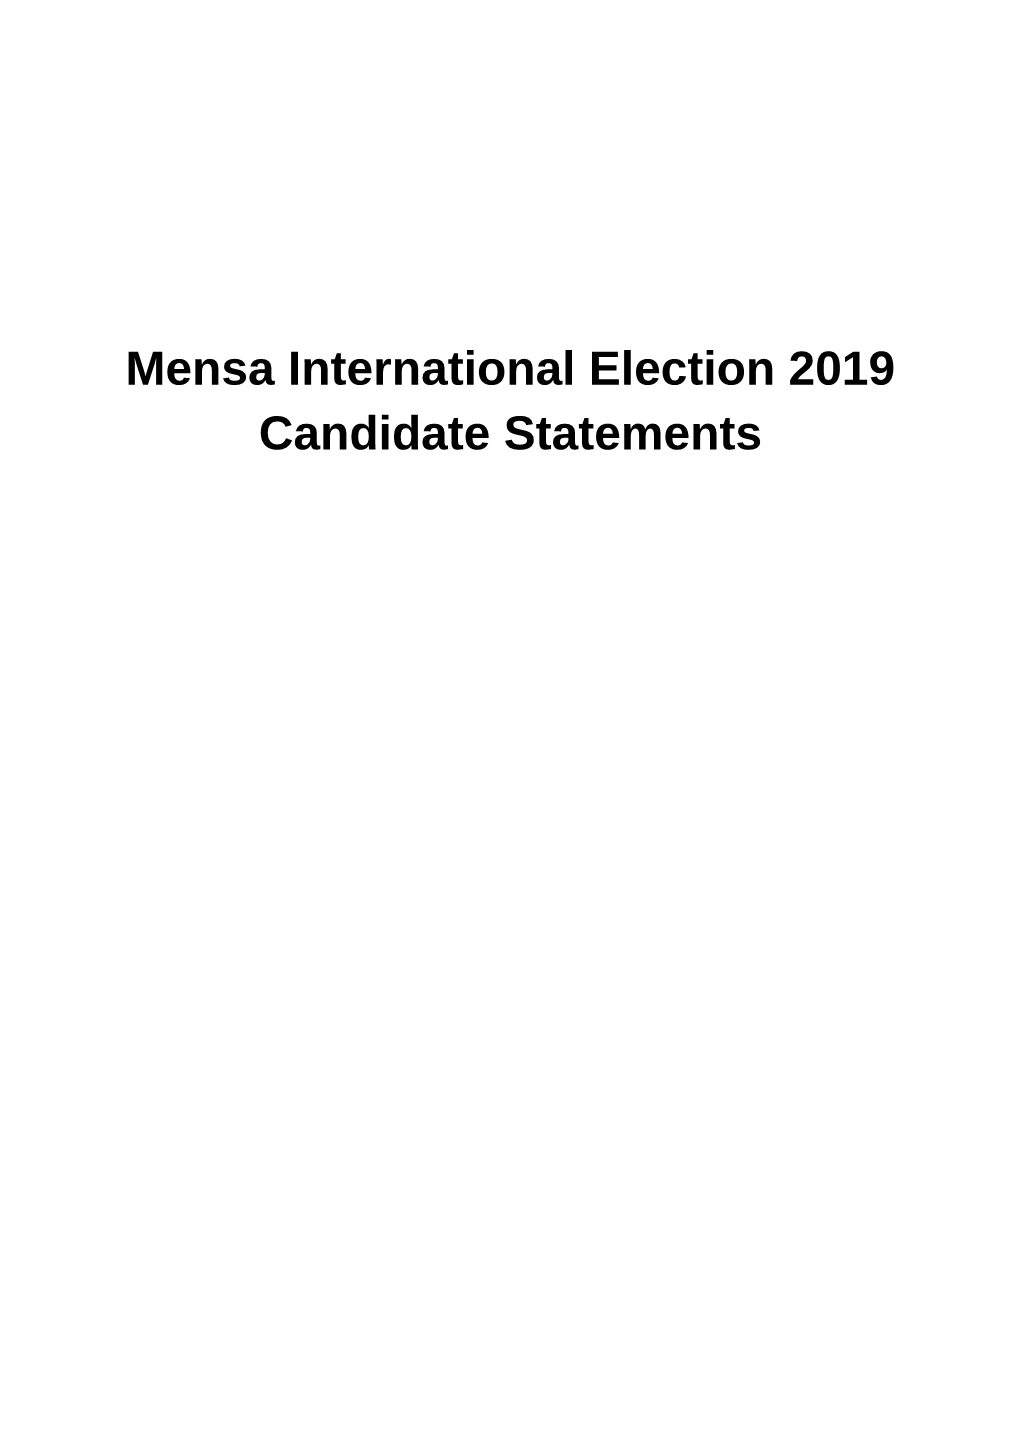 Mensa International Election 2019 Candidate Statements Mensa International Election 2019 Candidate Statements